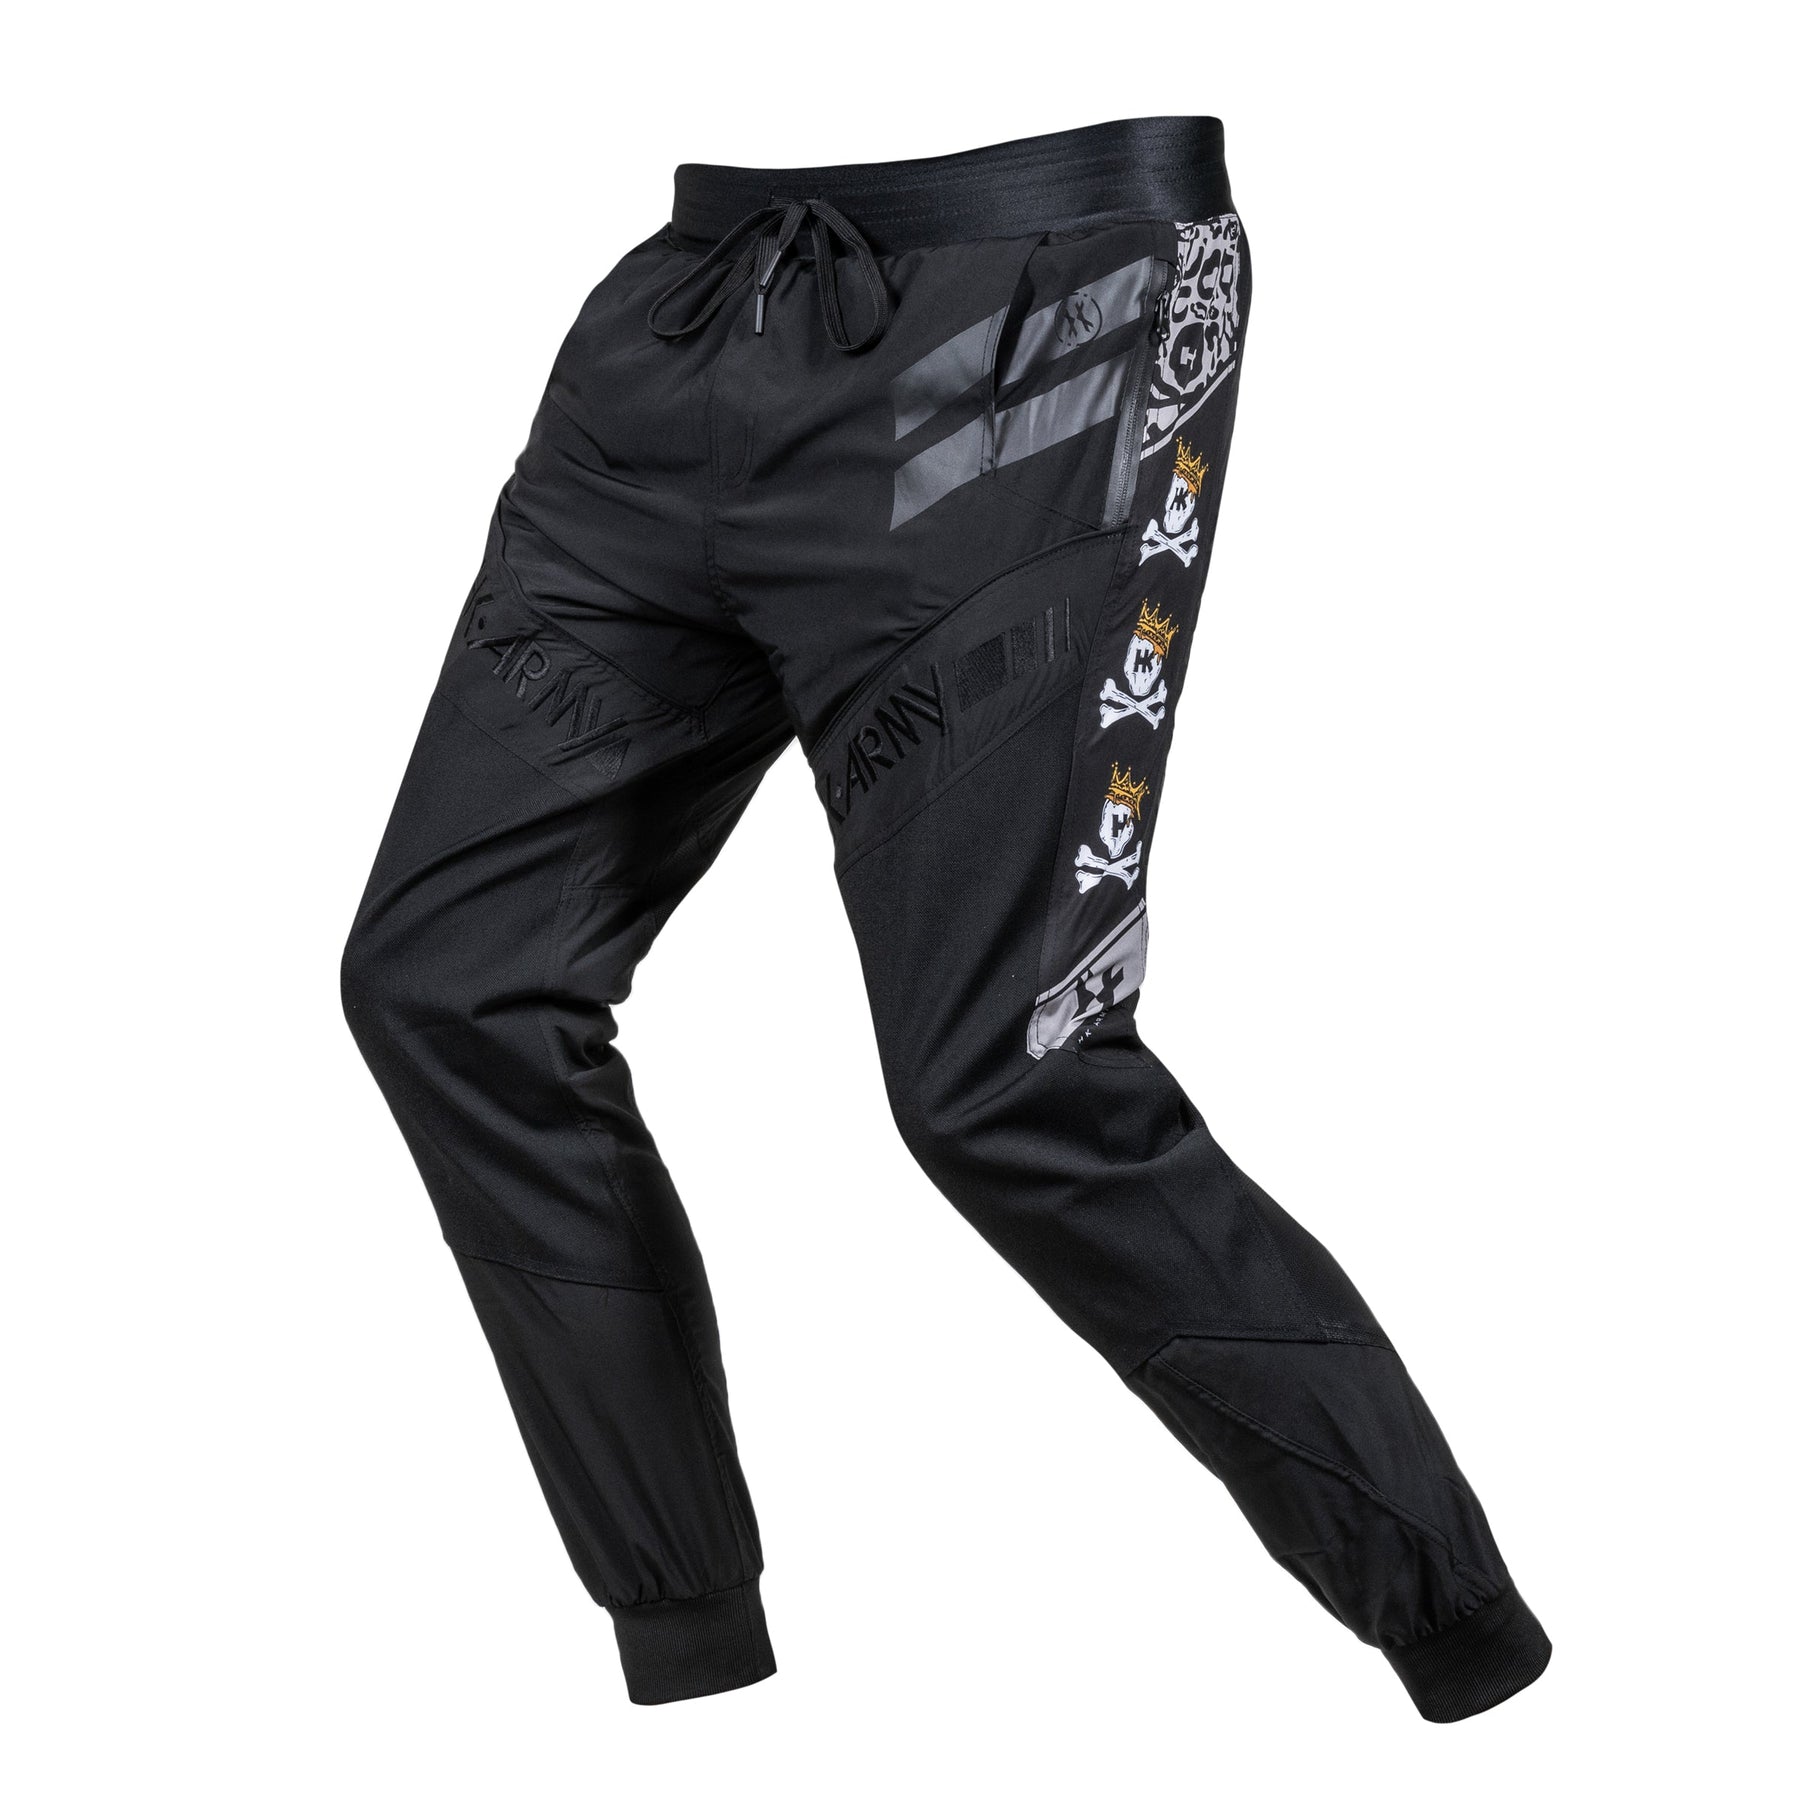 Hk Army TRK AIR Paintball Pants | The King | YA YA Bouchez| Jogger Pants